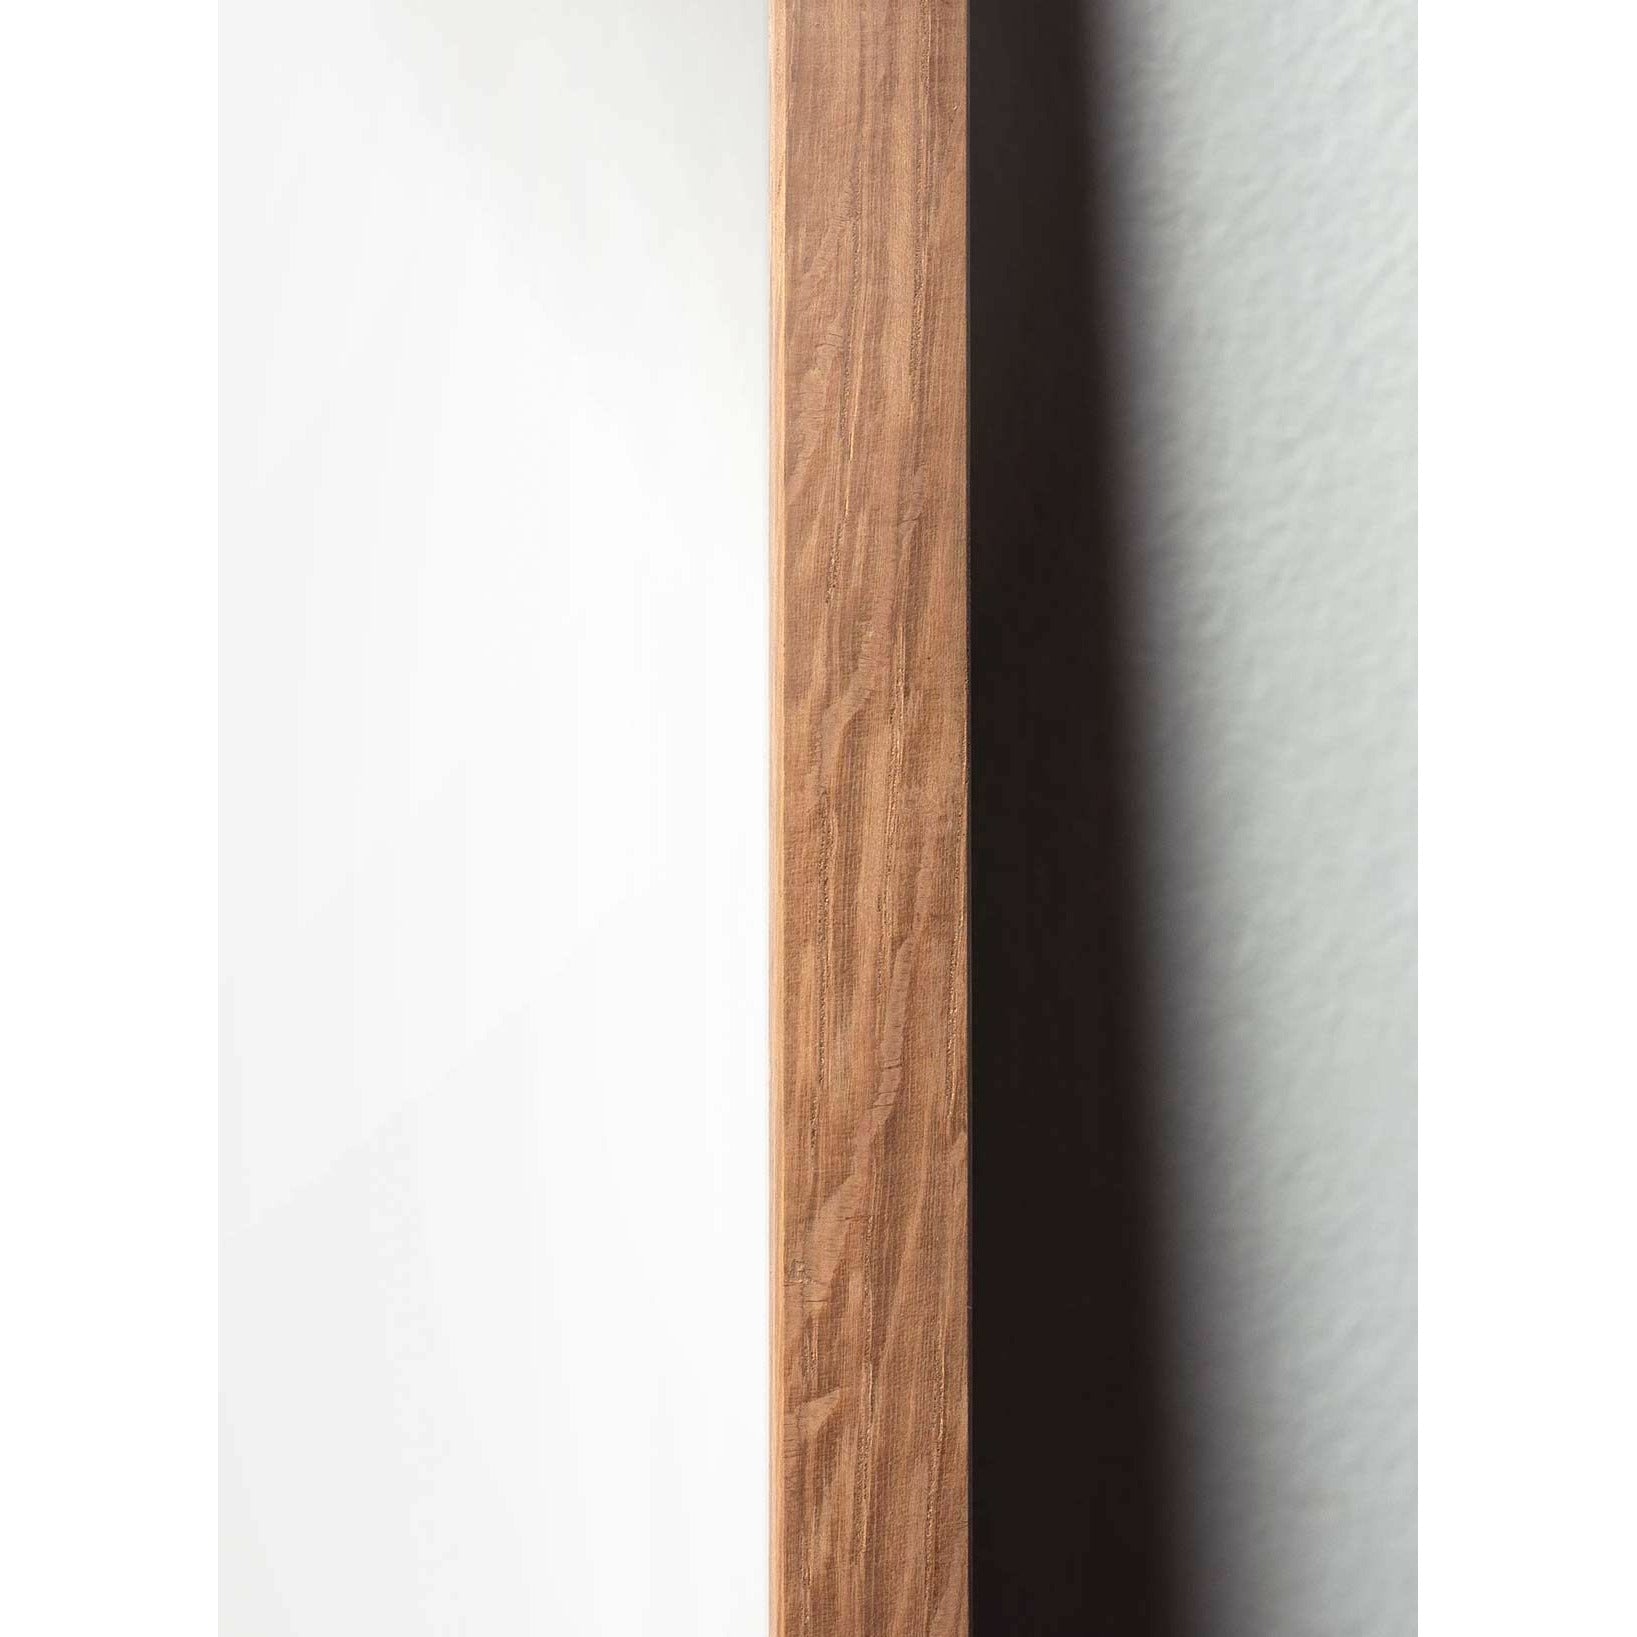 Brainchild Vintergapslinjeposter, ram i lätt trä 50x70 cm, vit bakgrund